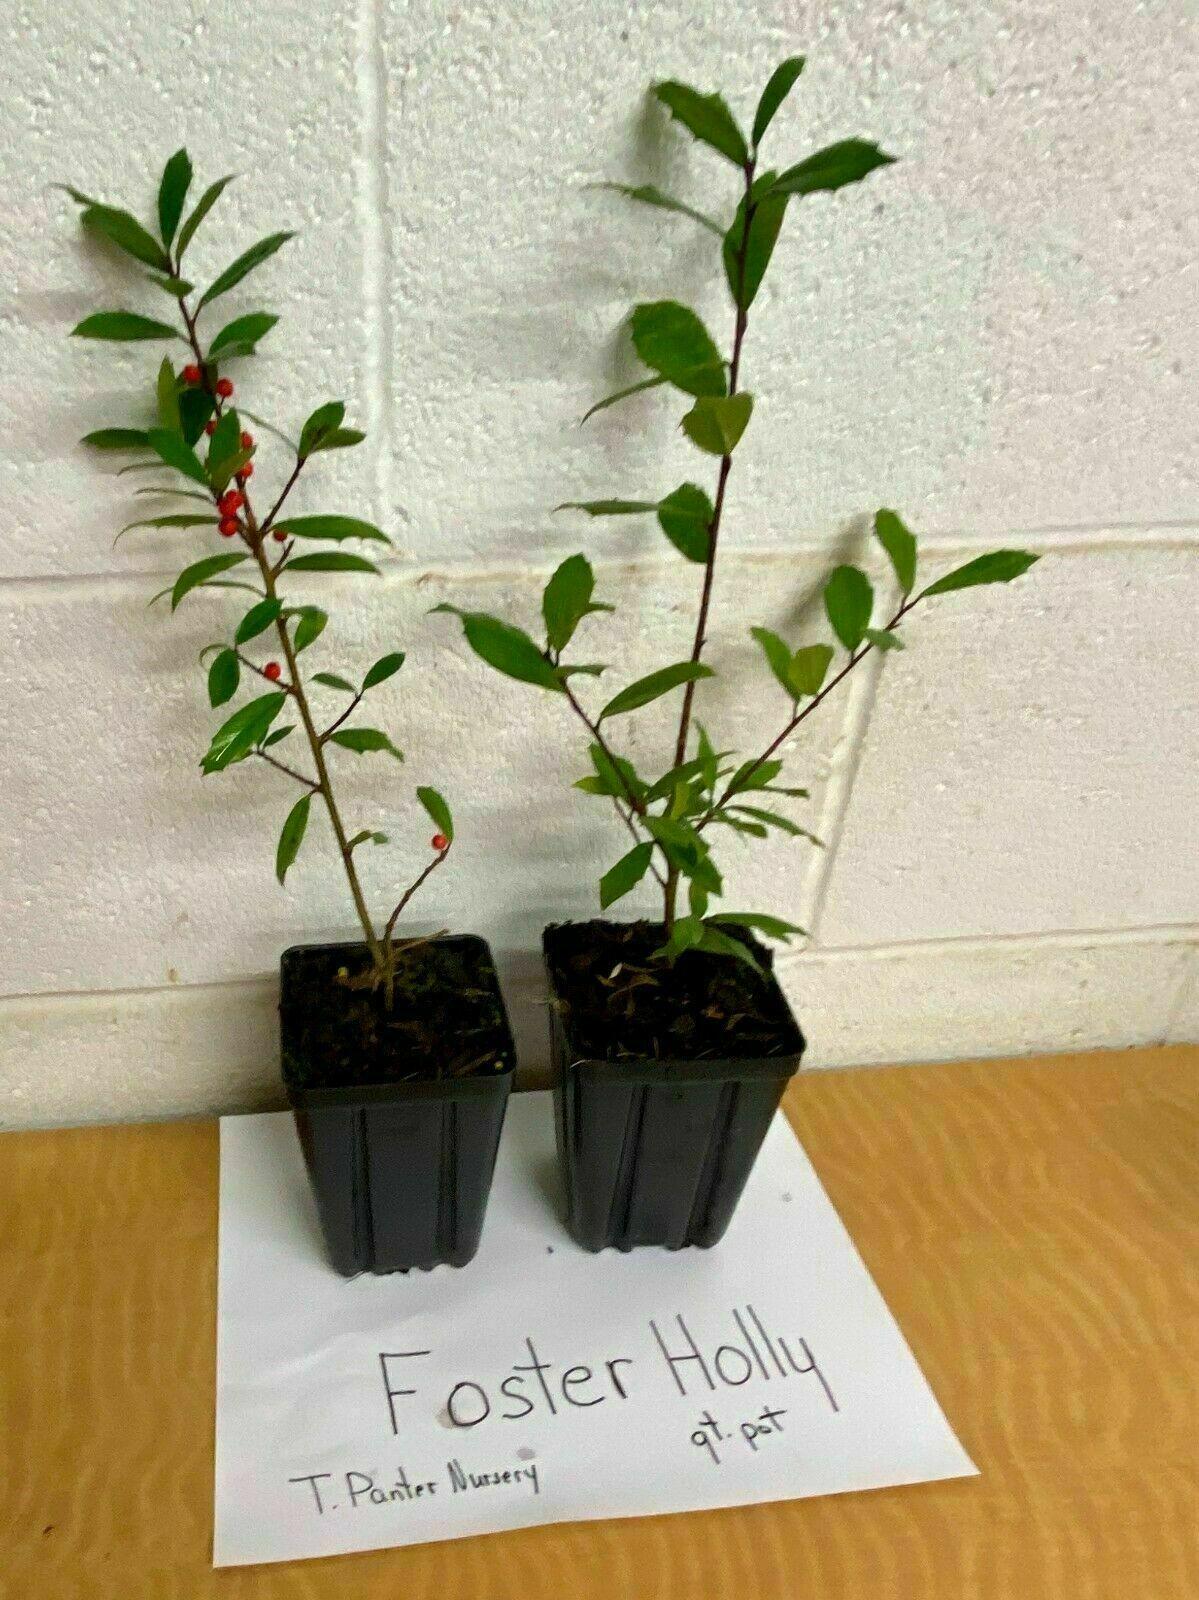 Foster Holly Tree/Shrub - Live Plant - 6-12" Tall - Quart Pot - Privacy Screen - The Nursery Center